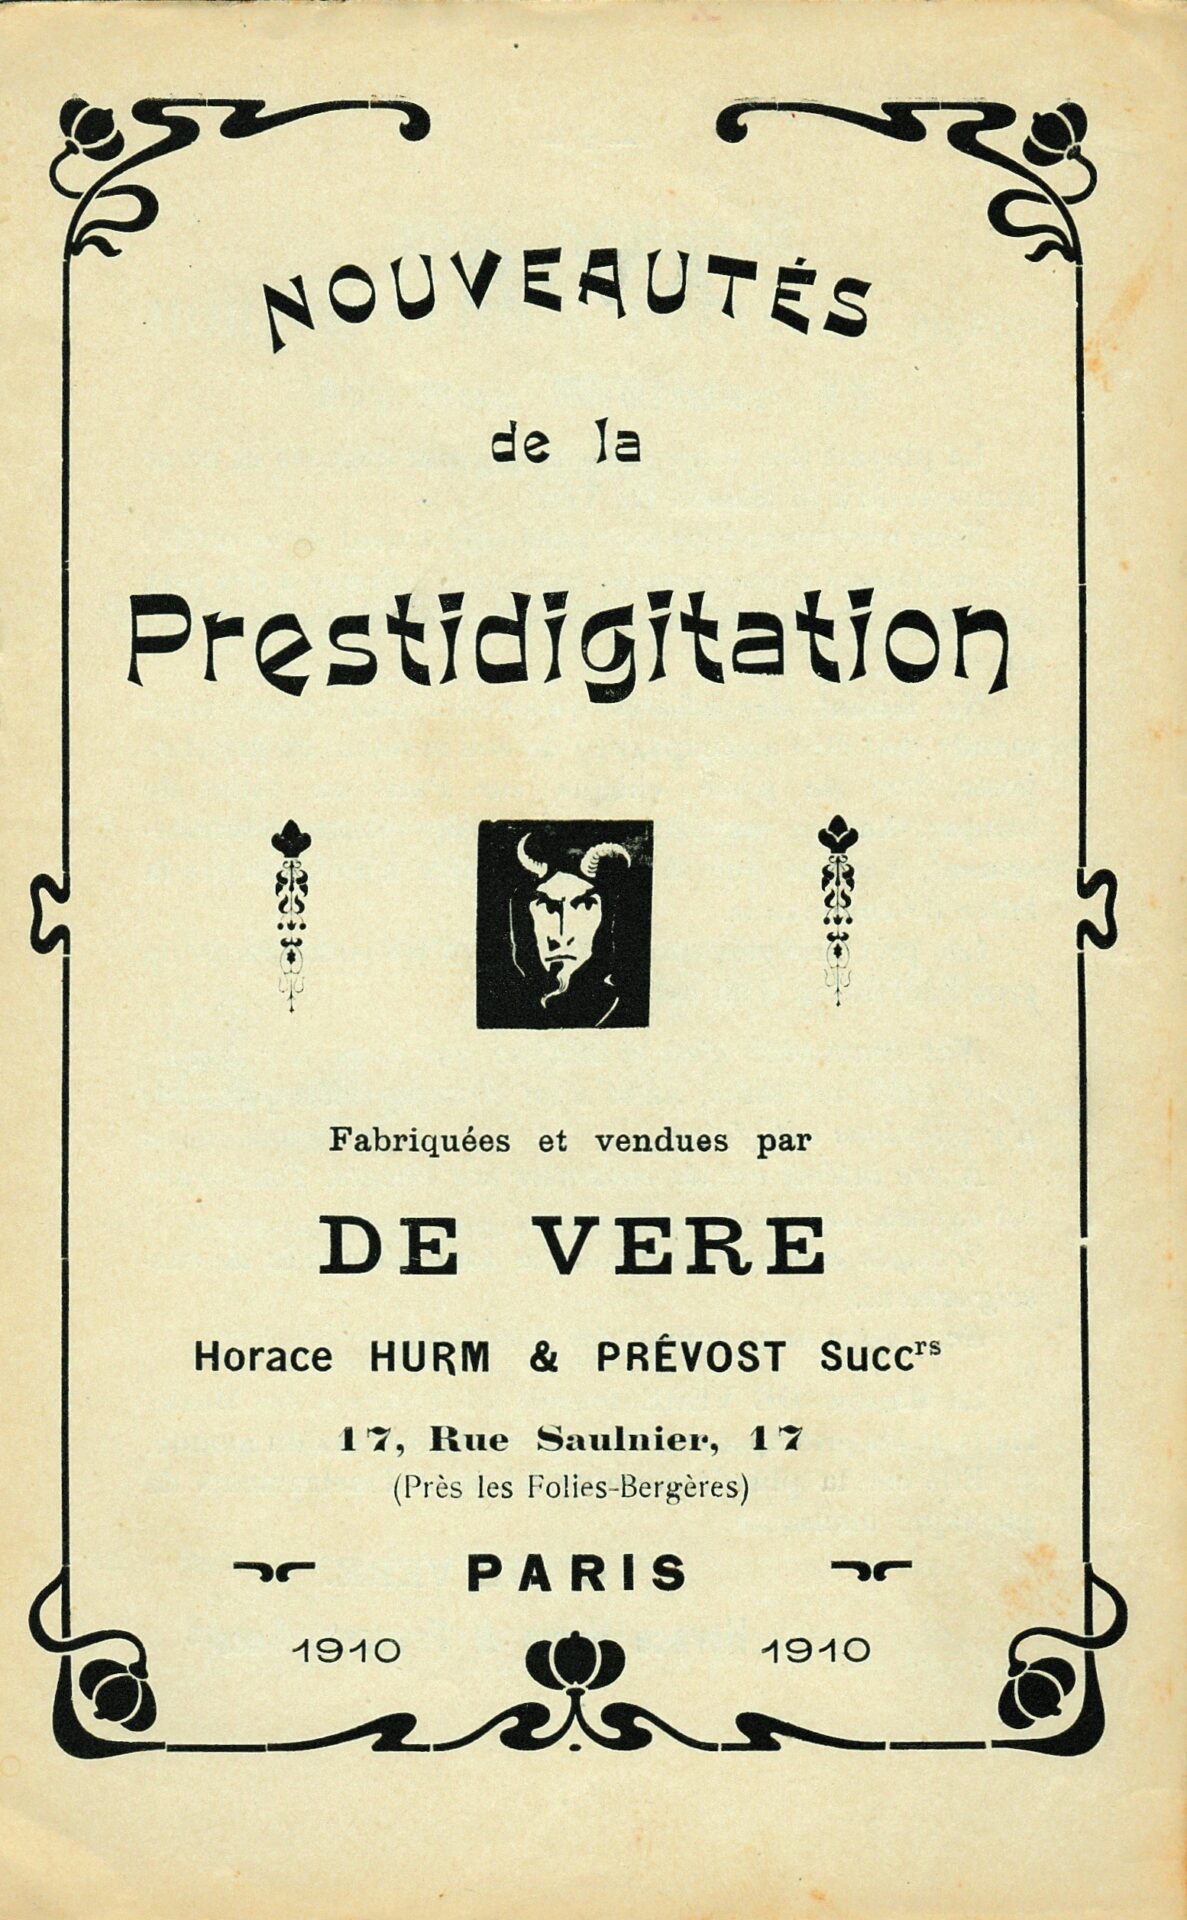 Horace Hurm & Prévost catalogue from 17 Rue Saulnier, Paris.